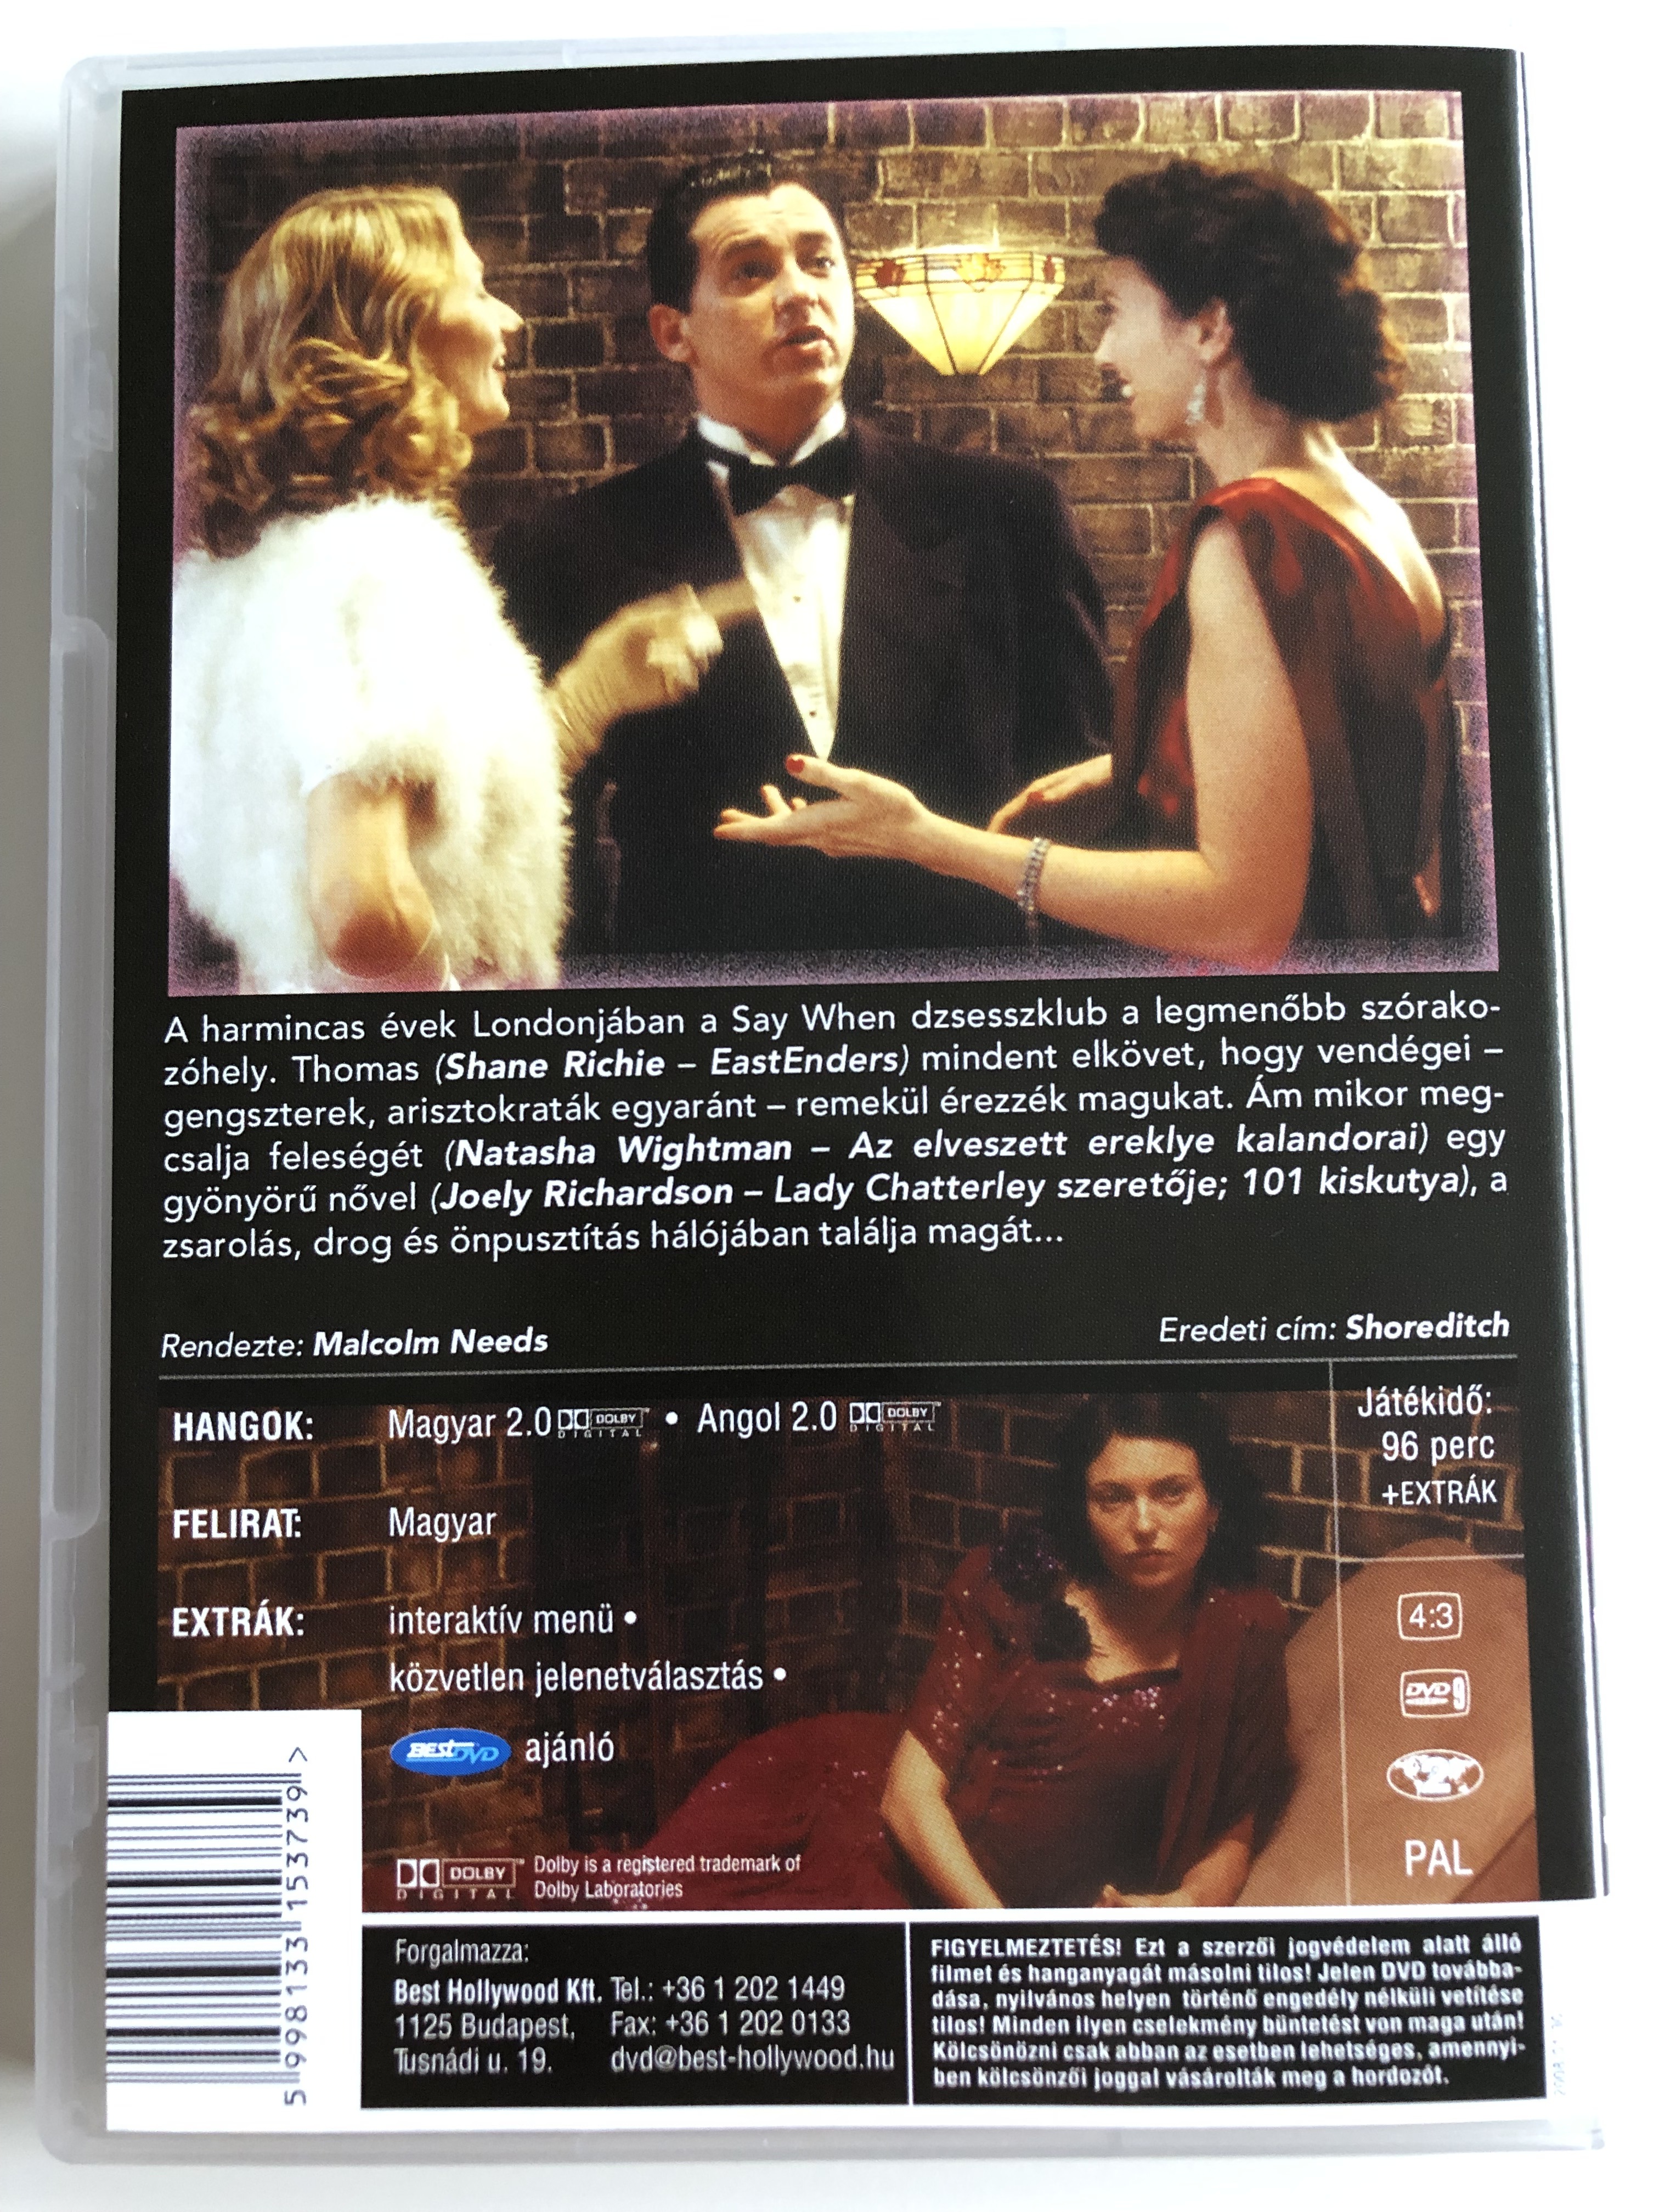 shoreditch-dvd-2003-k-t-n-k-z-tt-directed-by-malcolm-needs-starring-joely-richardson-shane-richie-natasha-wightman-2-.jpg